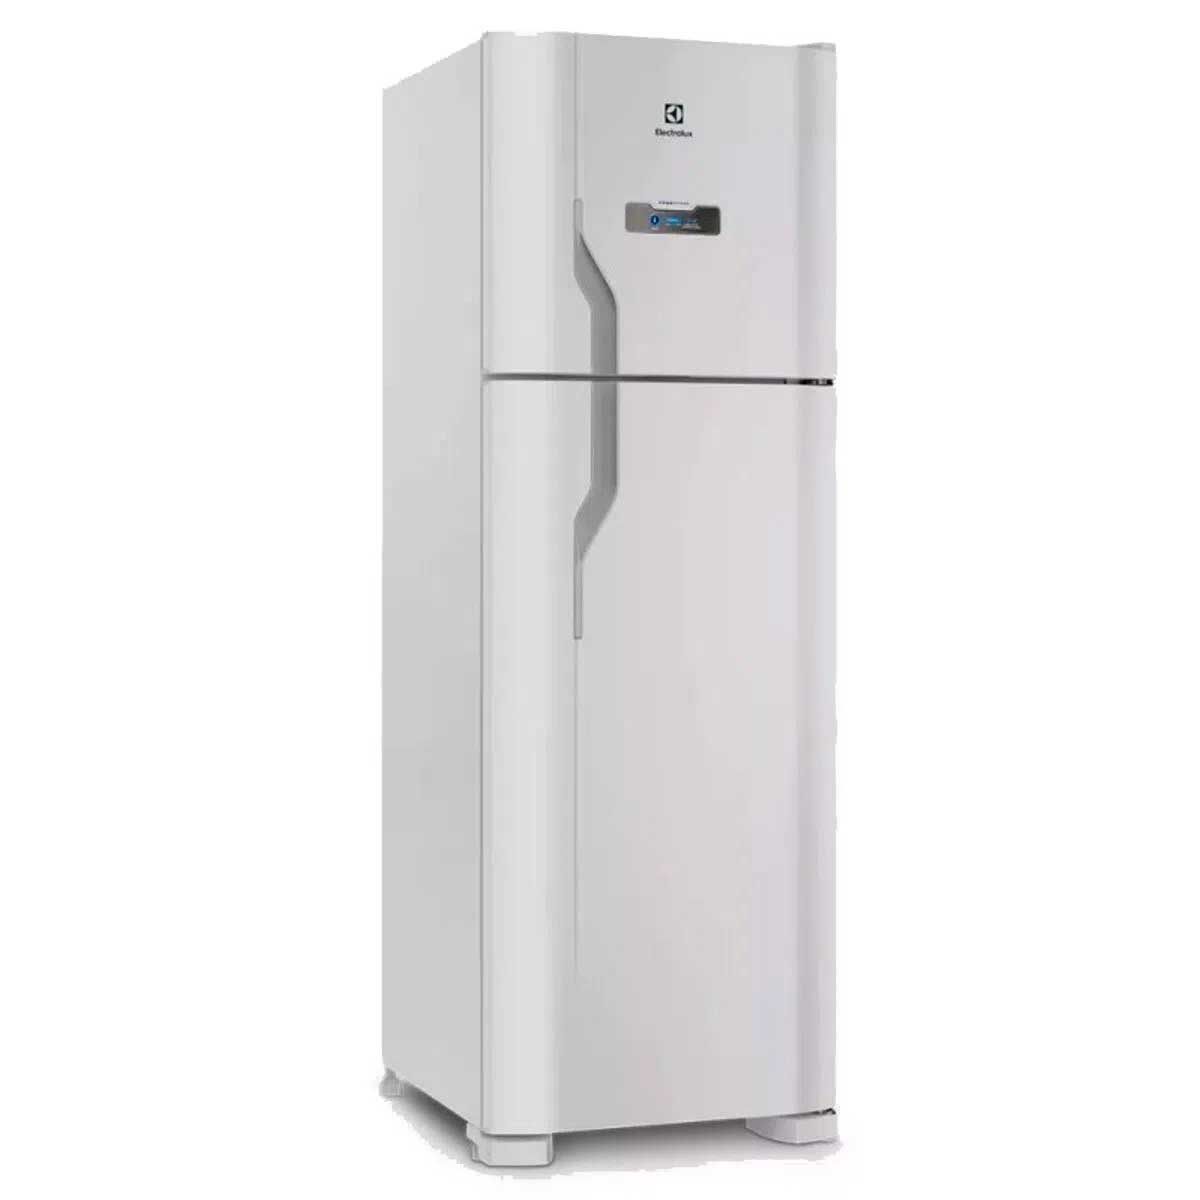 geladeira-electrolux-frost-free-duplex-2-portas-dfn41-371-litros-branco-220v-1.jpg